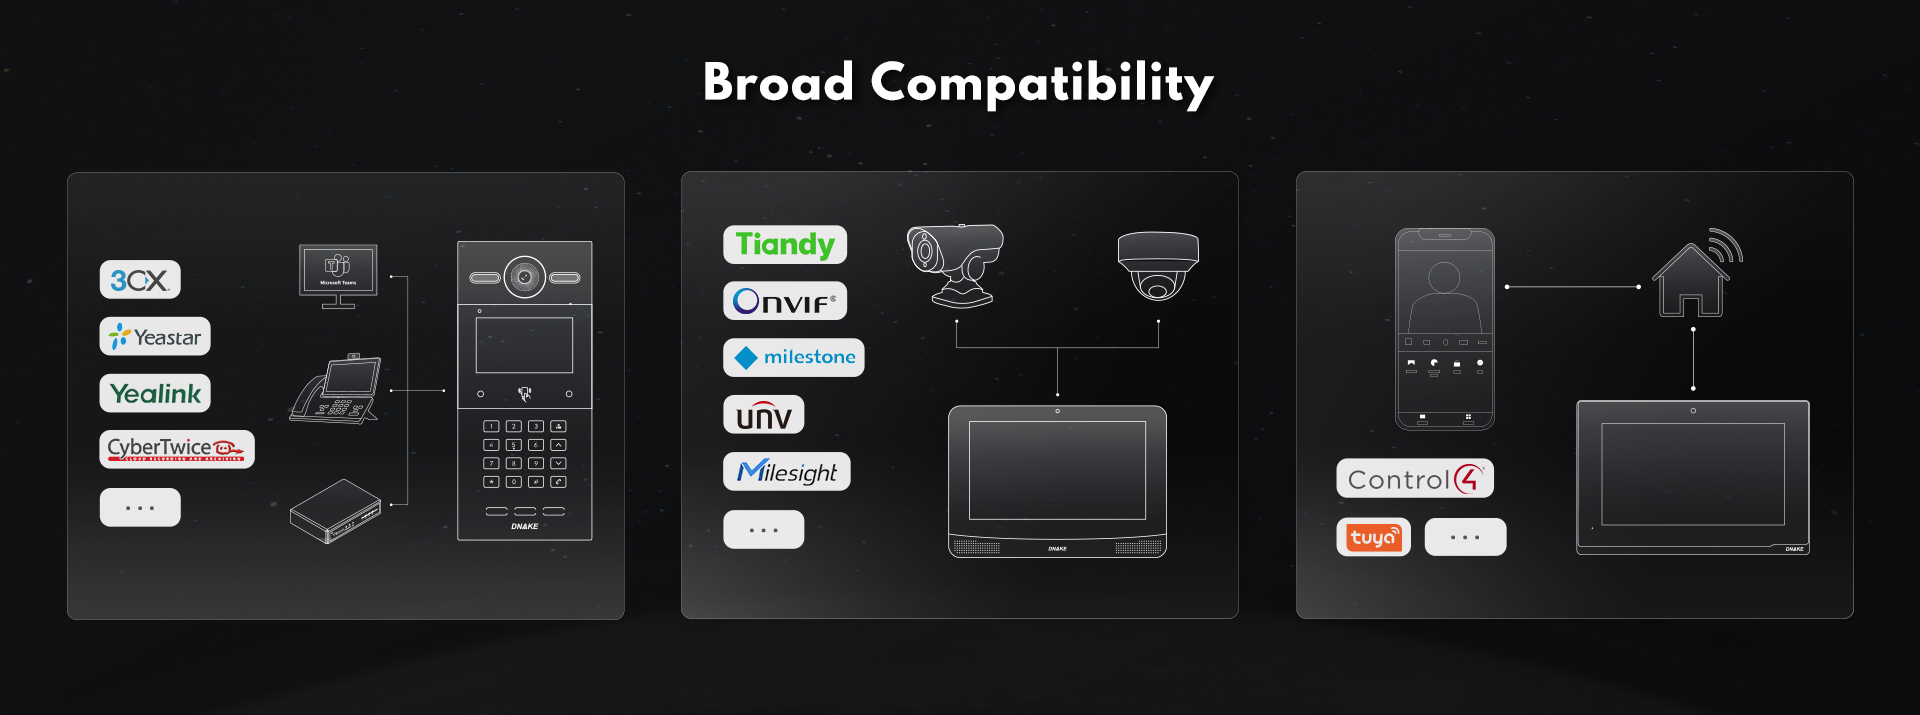 Broad Compatibility